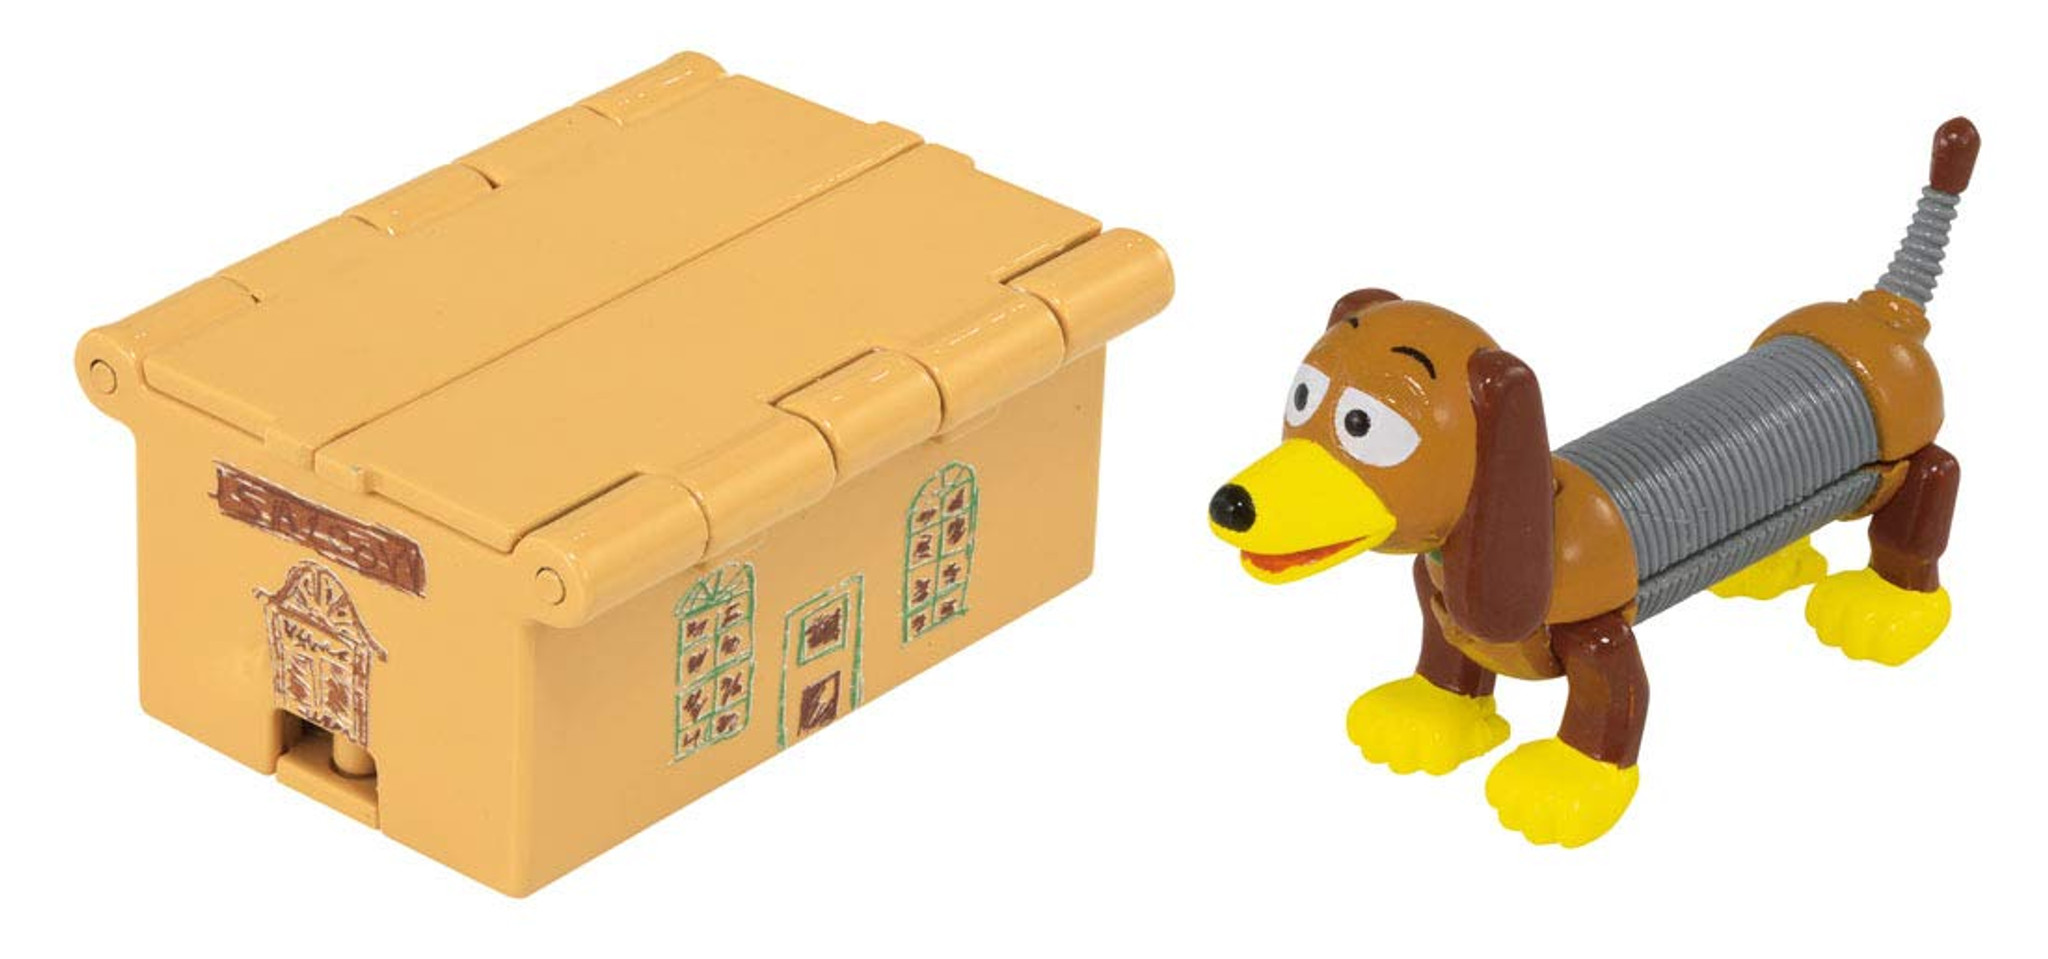 Tomy Dream Tomica Ts 08 Toy Story Slinky Dog Cardboard Toy Box 875000